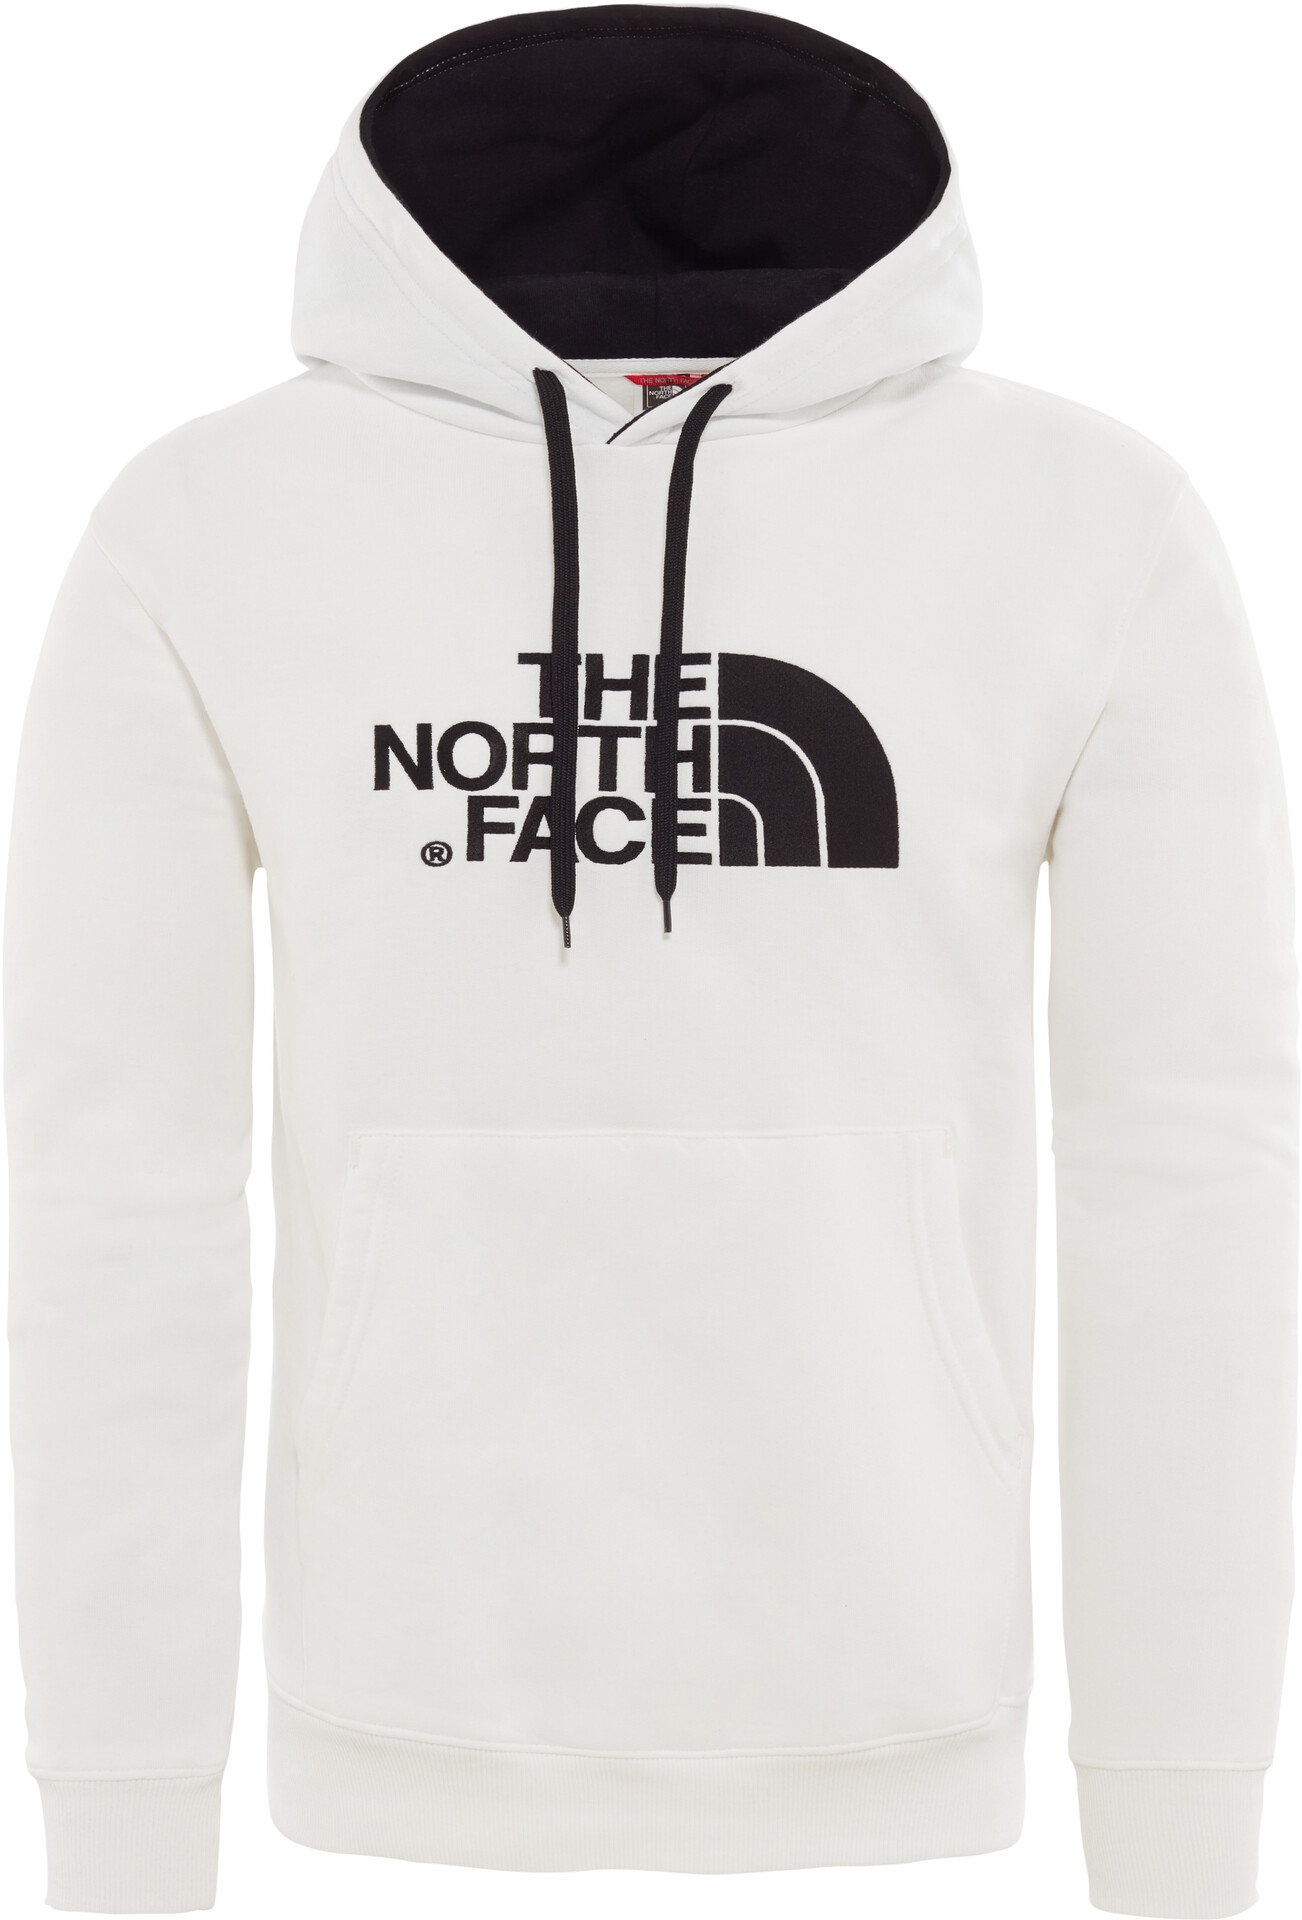 north face sweater sale